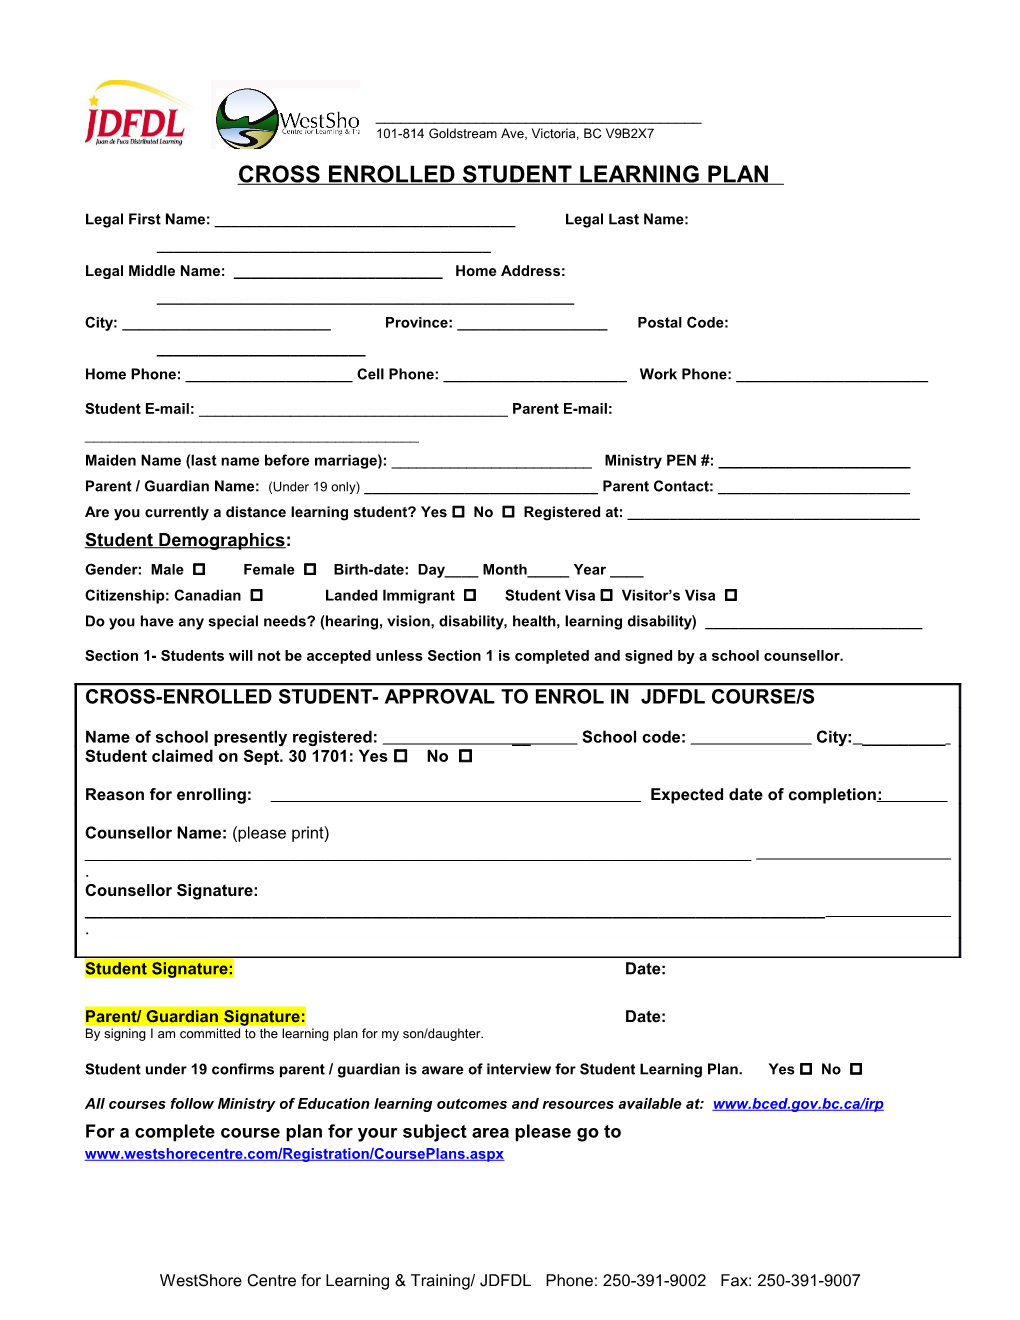 Cross Enrolled Student Learning Plan